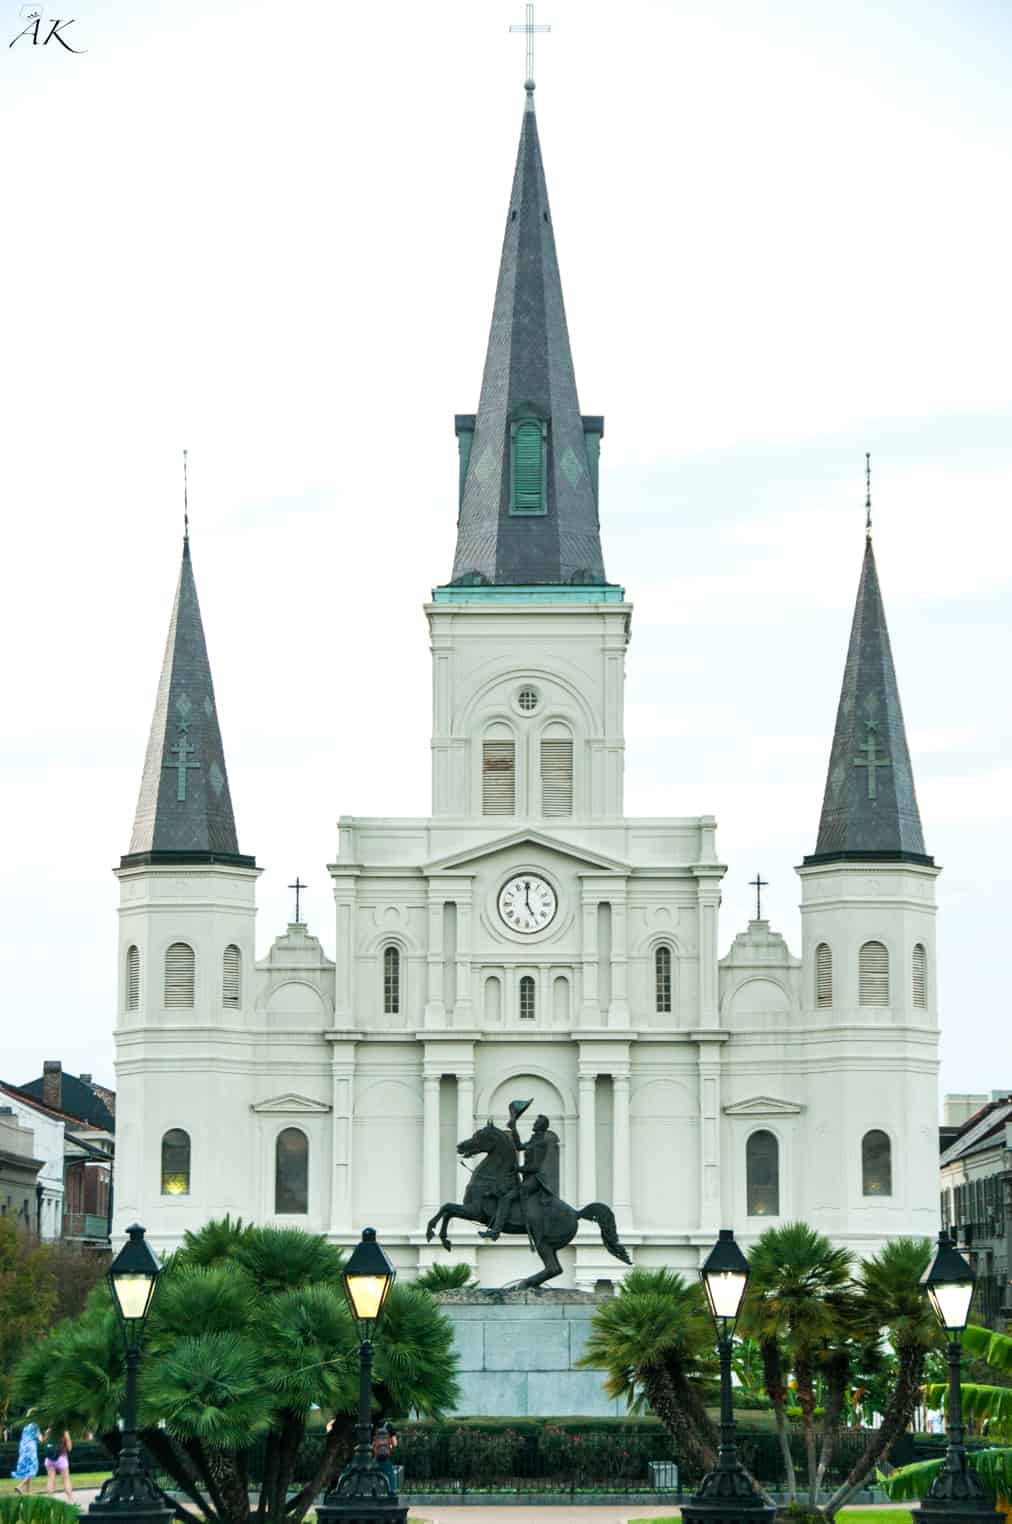 Jackson Square New Orleans